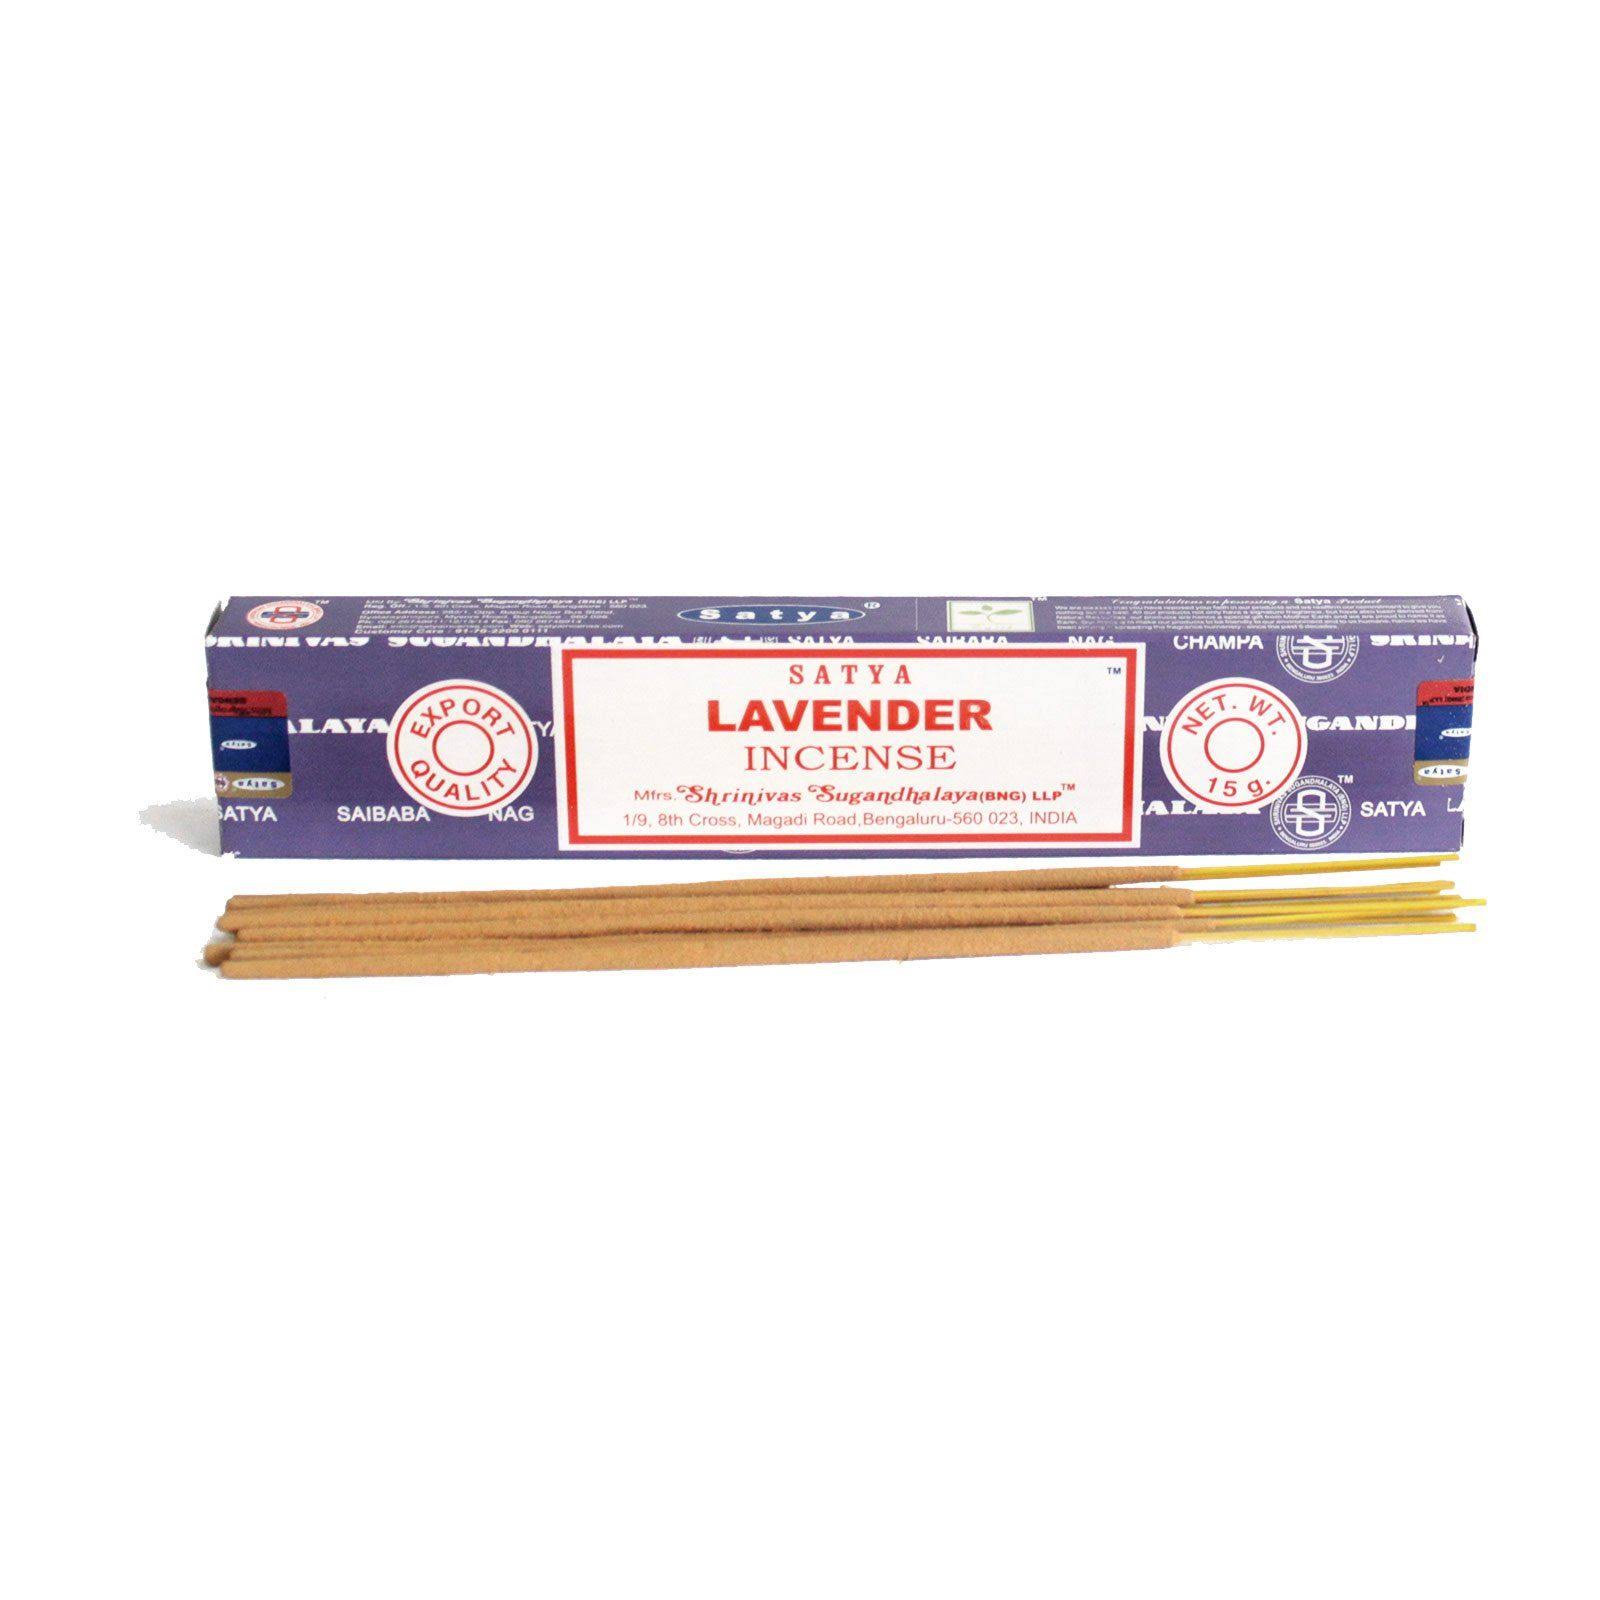 Satya Nag Champa Incense Sticks - Lavender, 15g